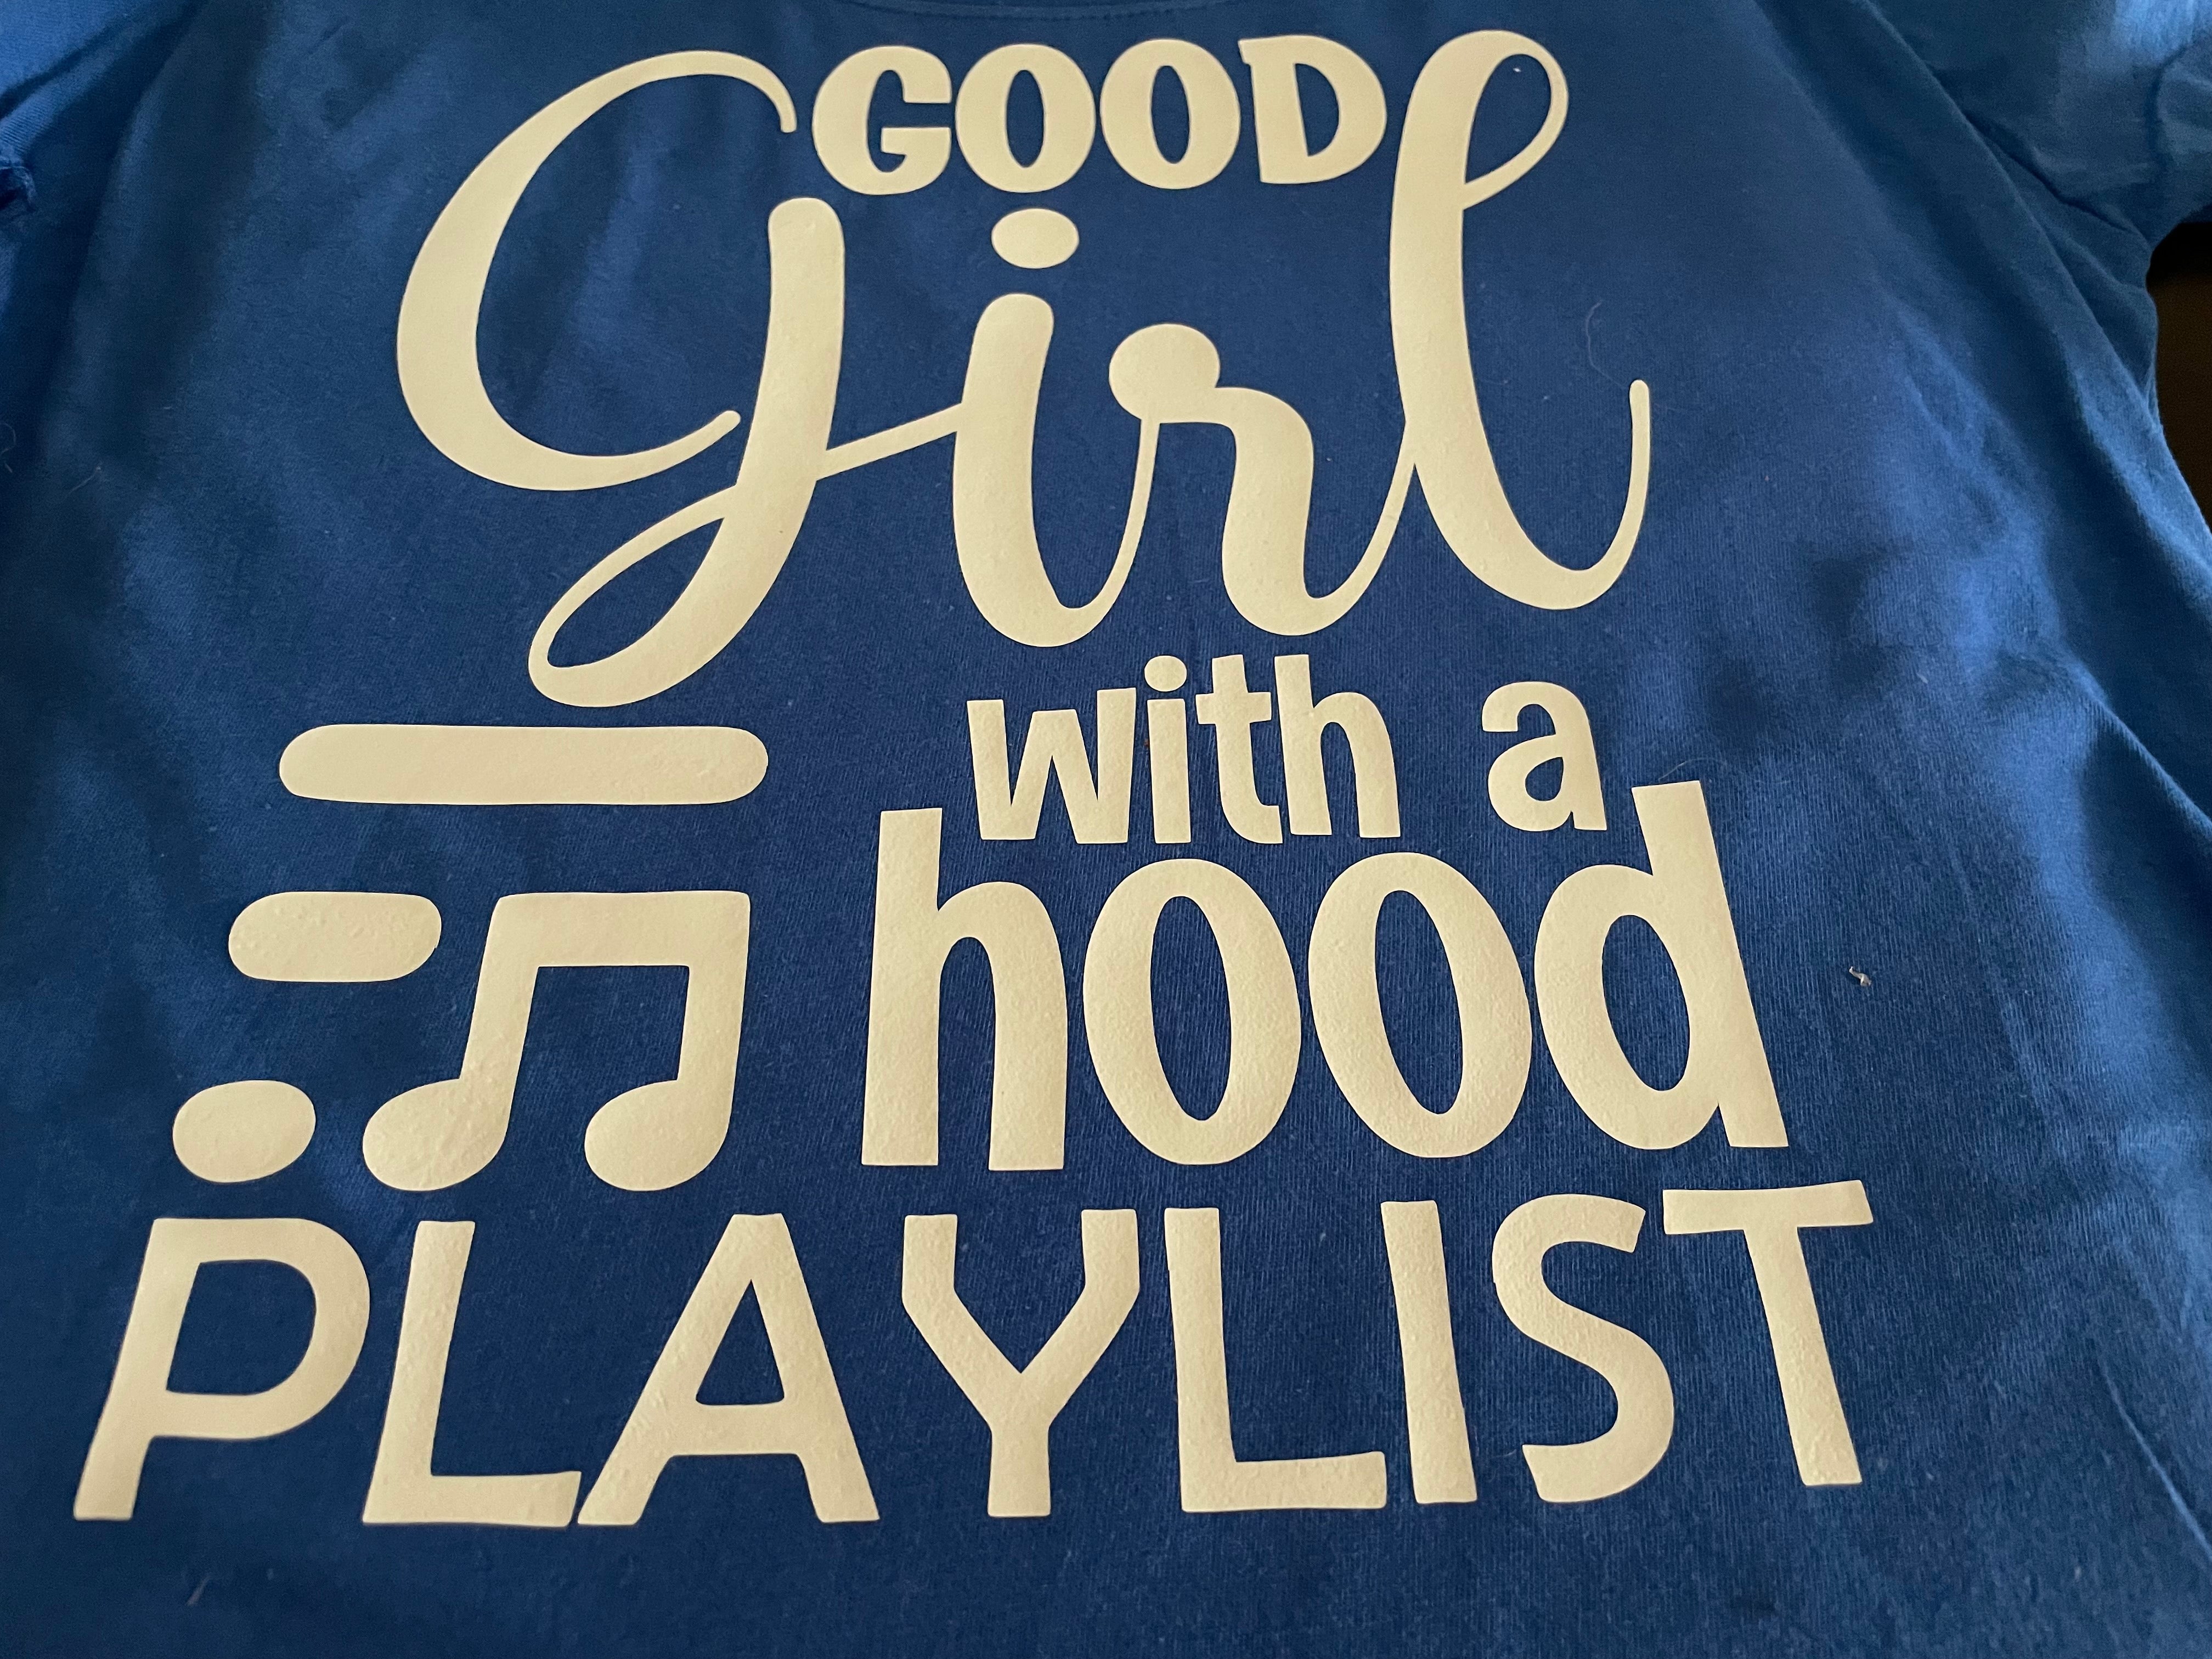 Good Girl w/ Hood Playlist T-shirt